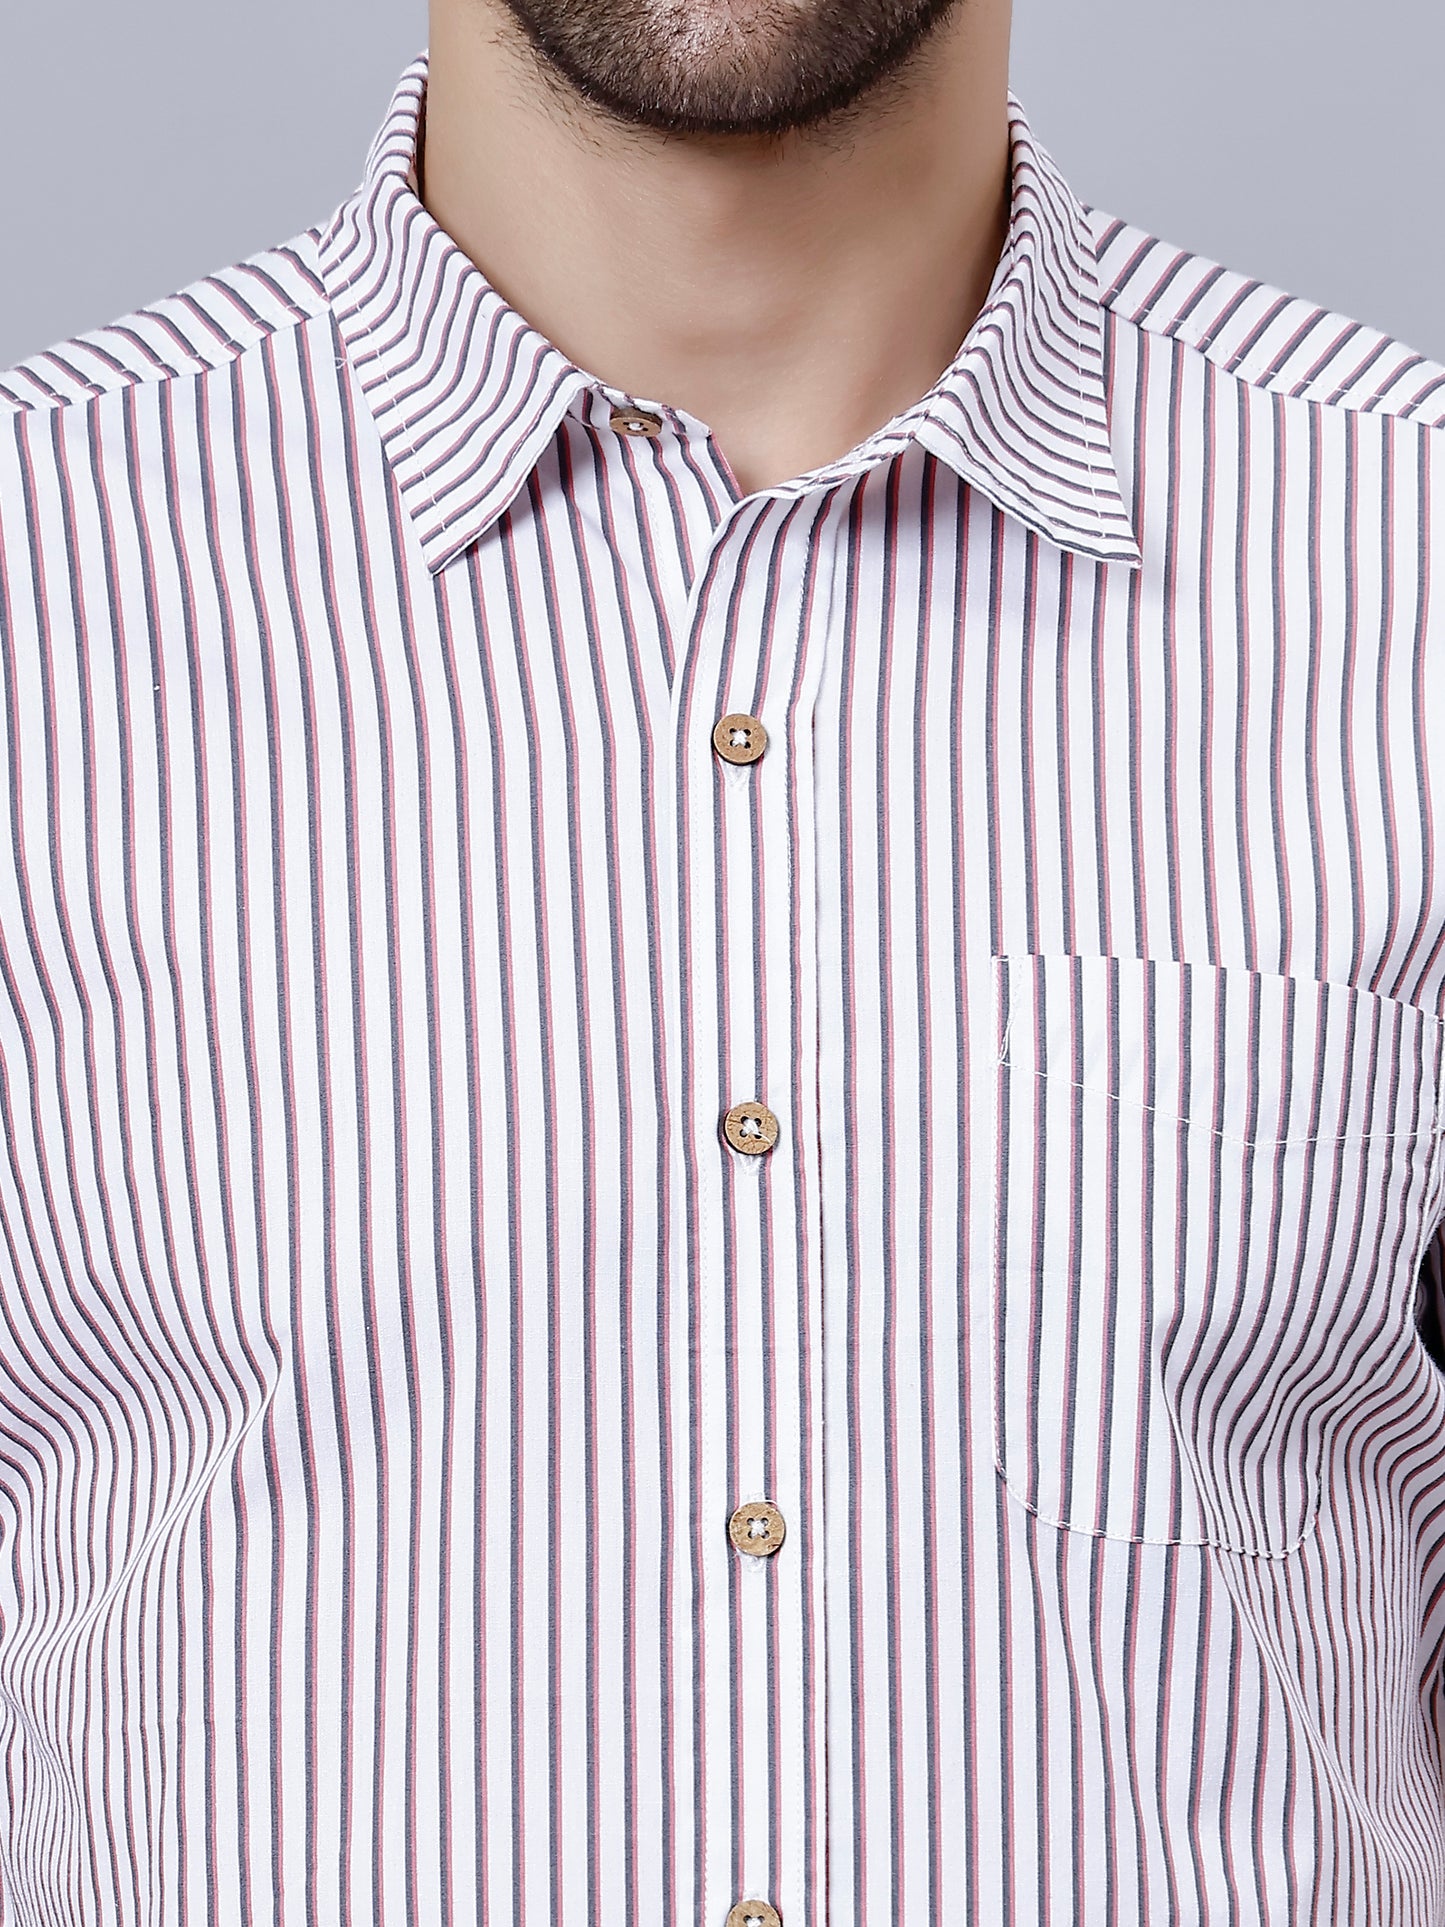 Classic Striped Shirt for Men